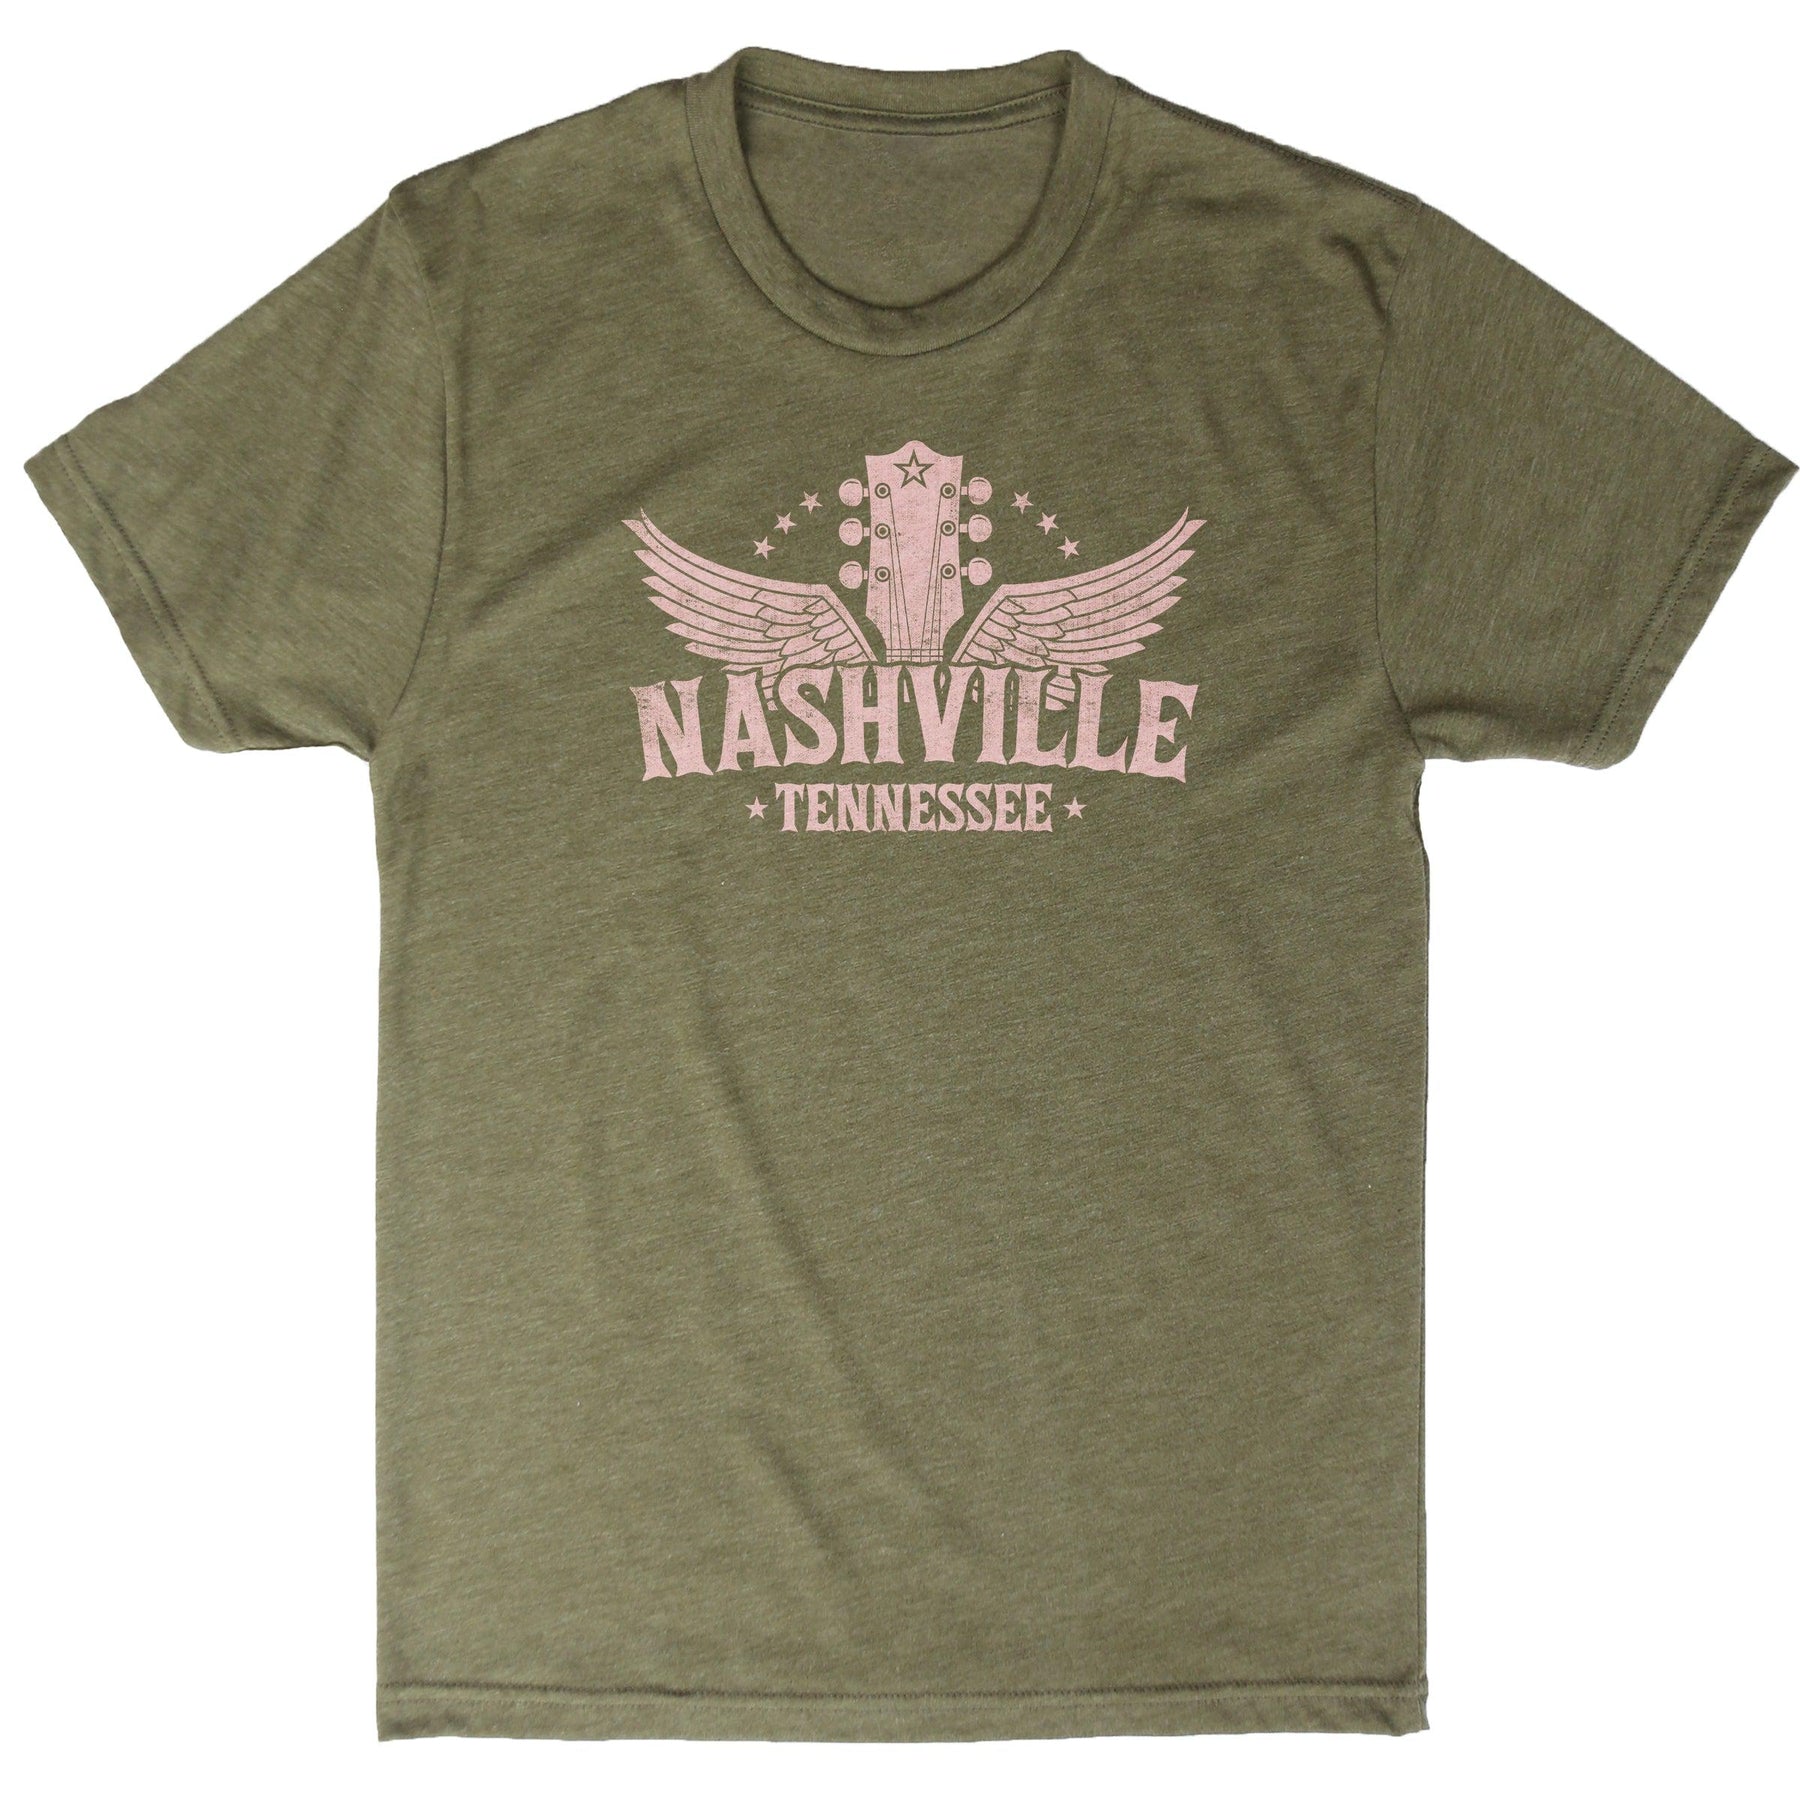 Nashville Tennessee Wings Tee